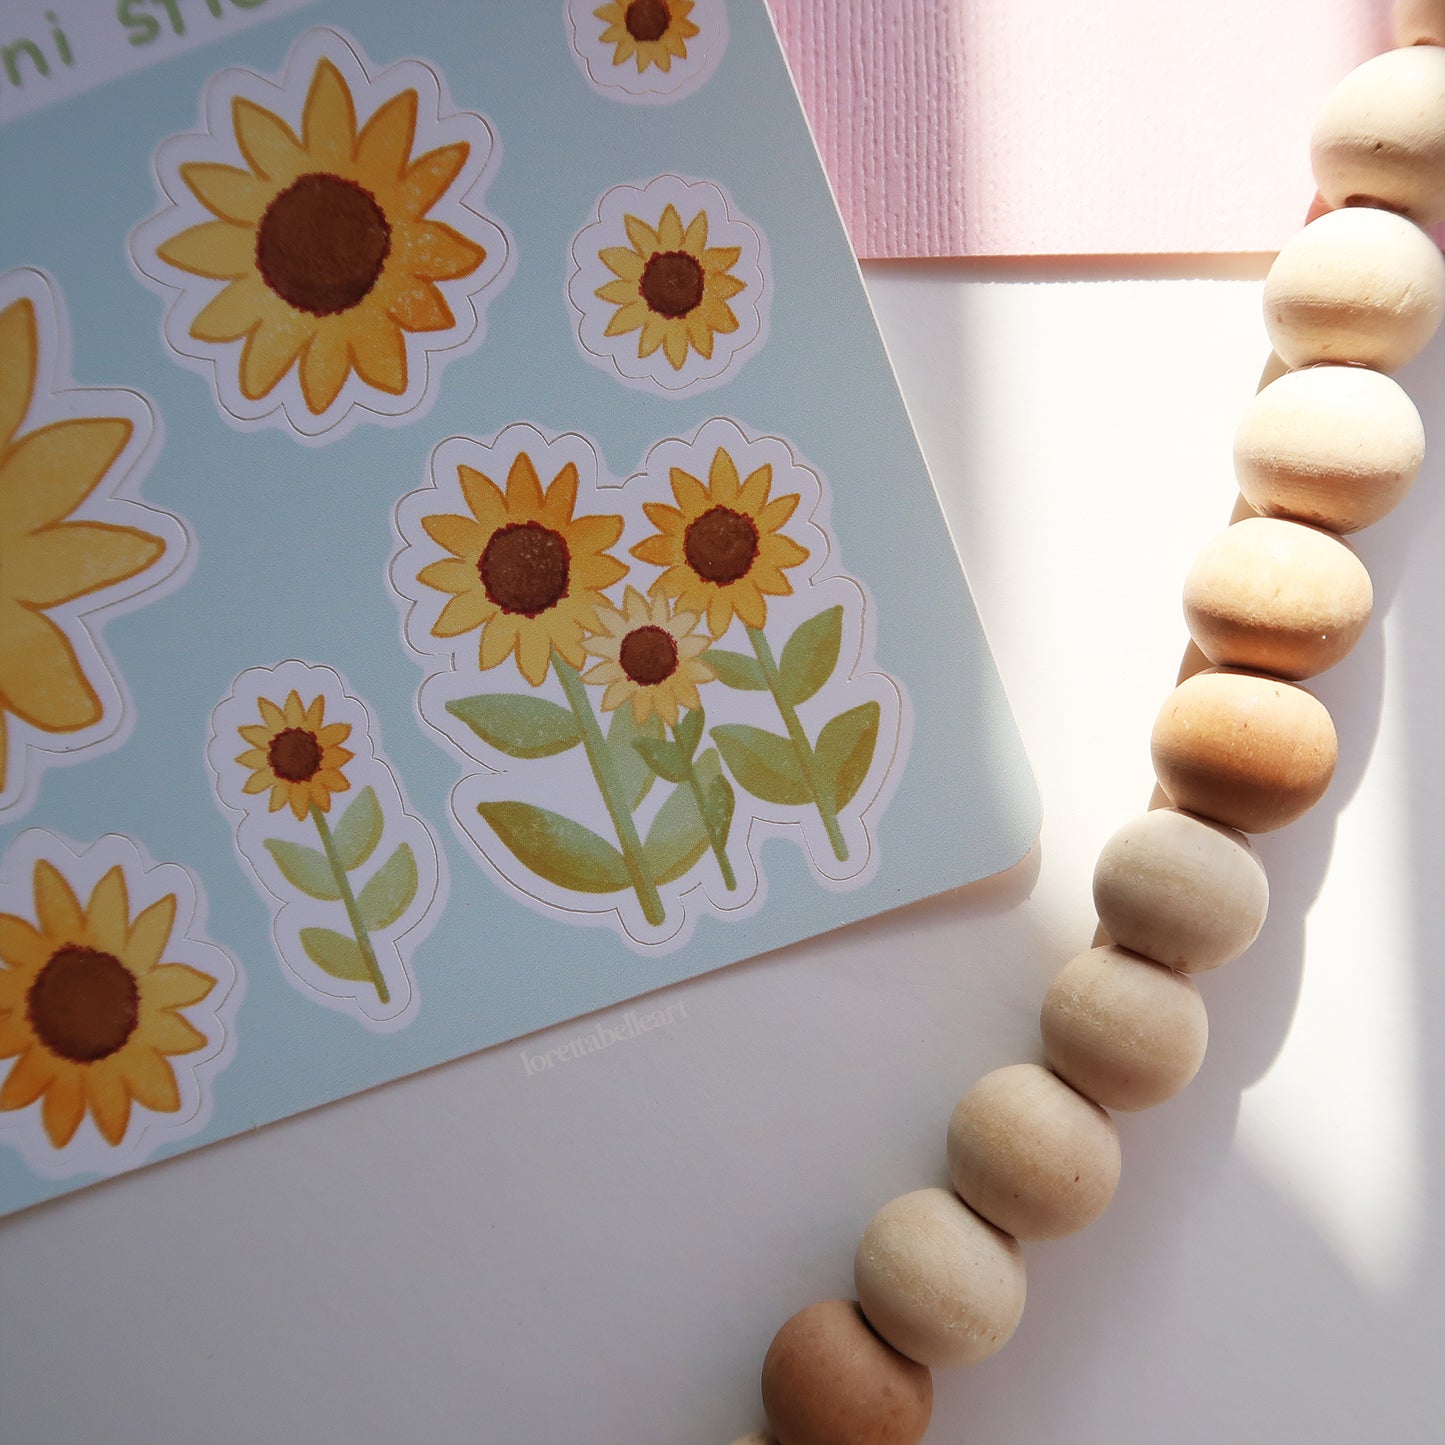 Sunflowers Mini Sticker Sheet